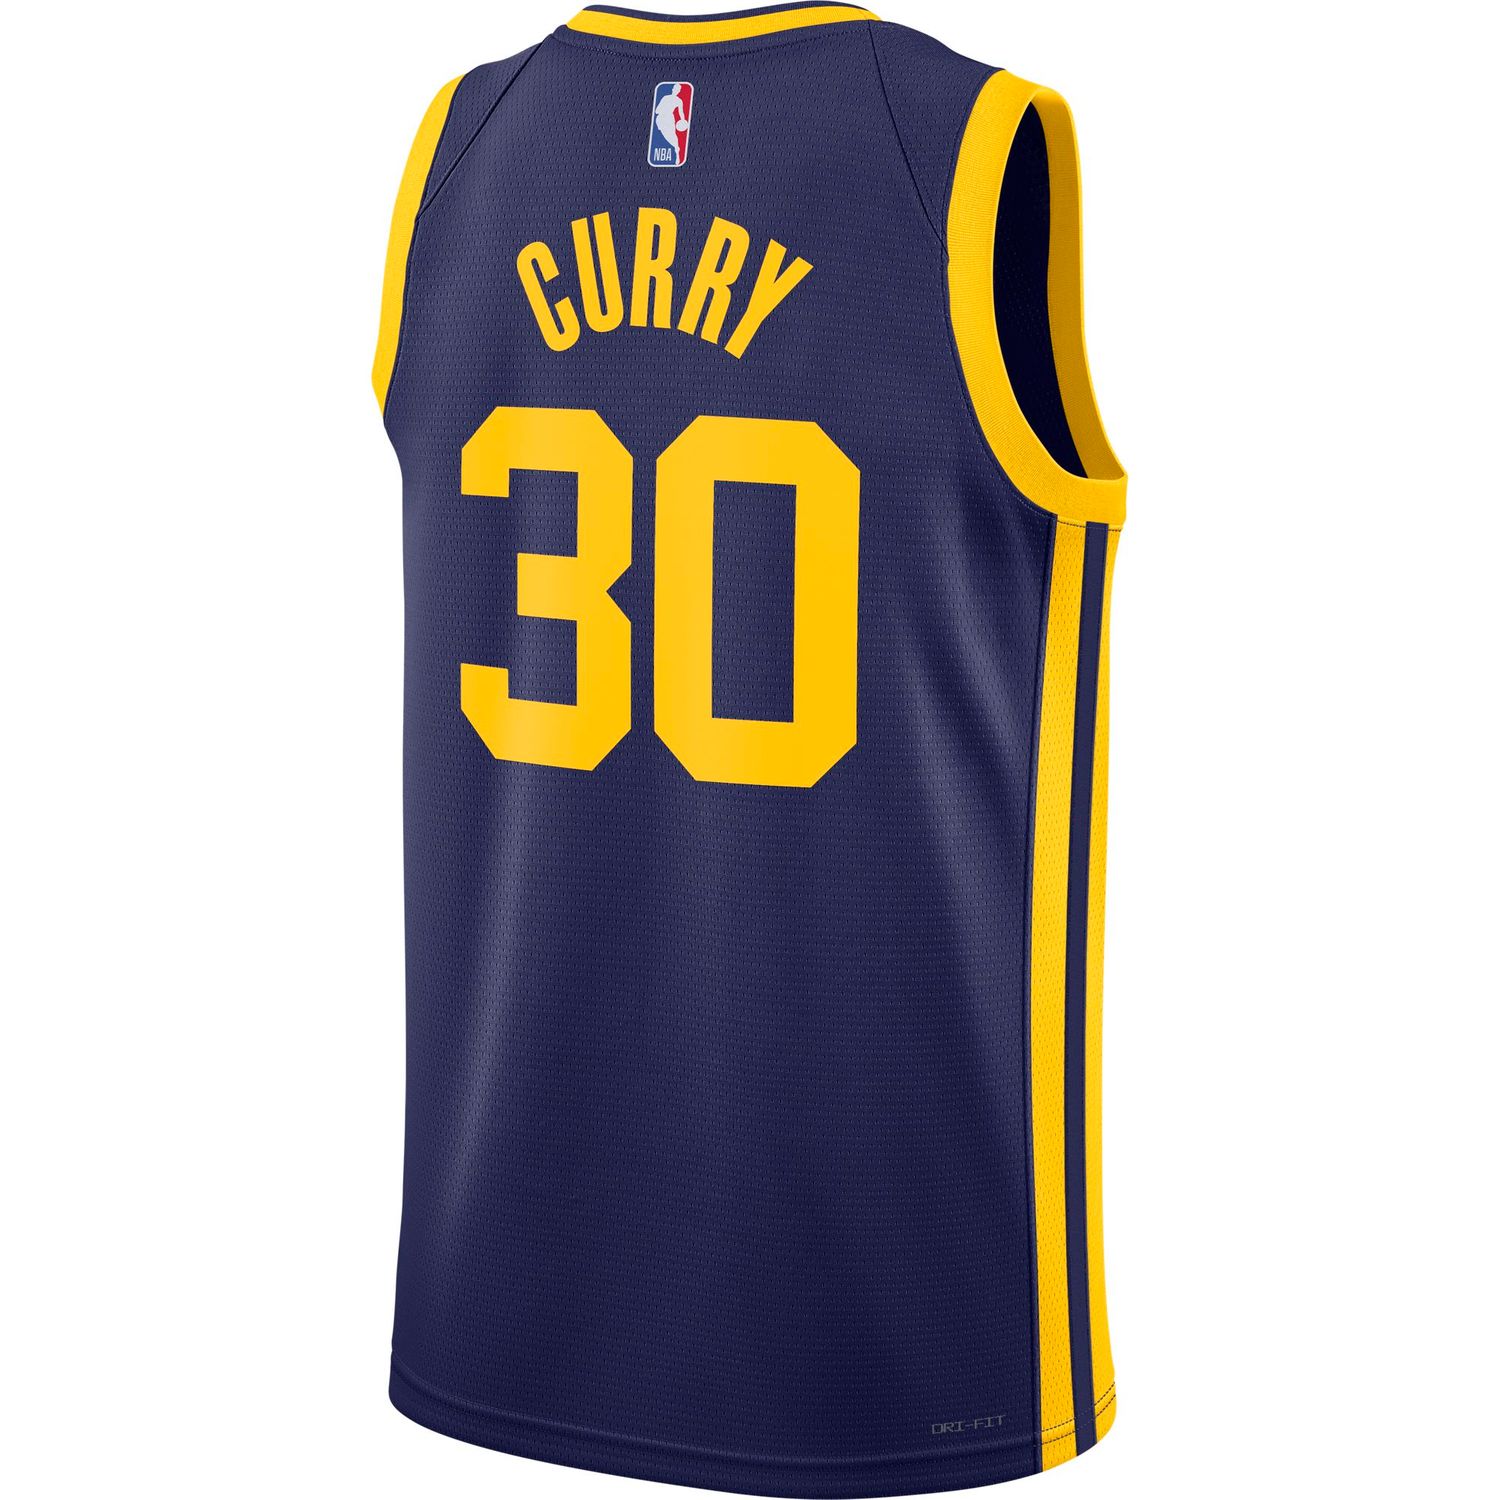 Jordan NBA Stephen Curry Statement Edition Swingman Jersey